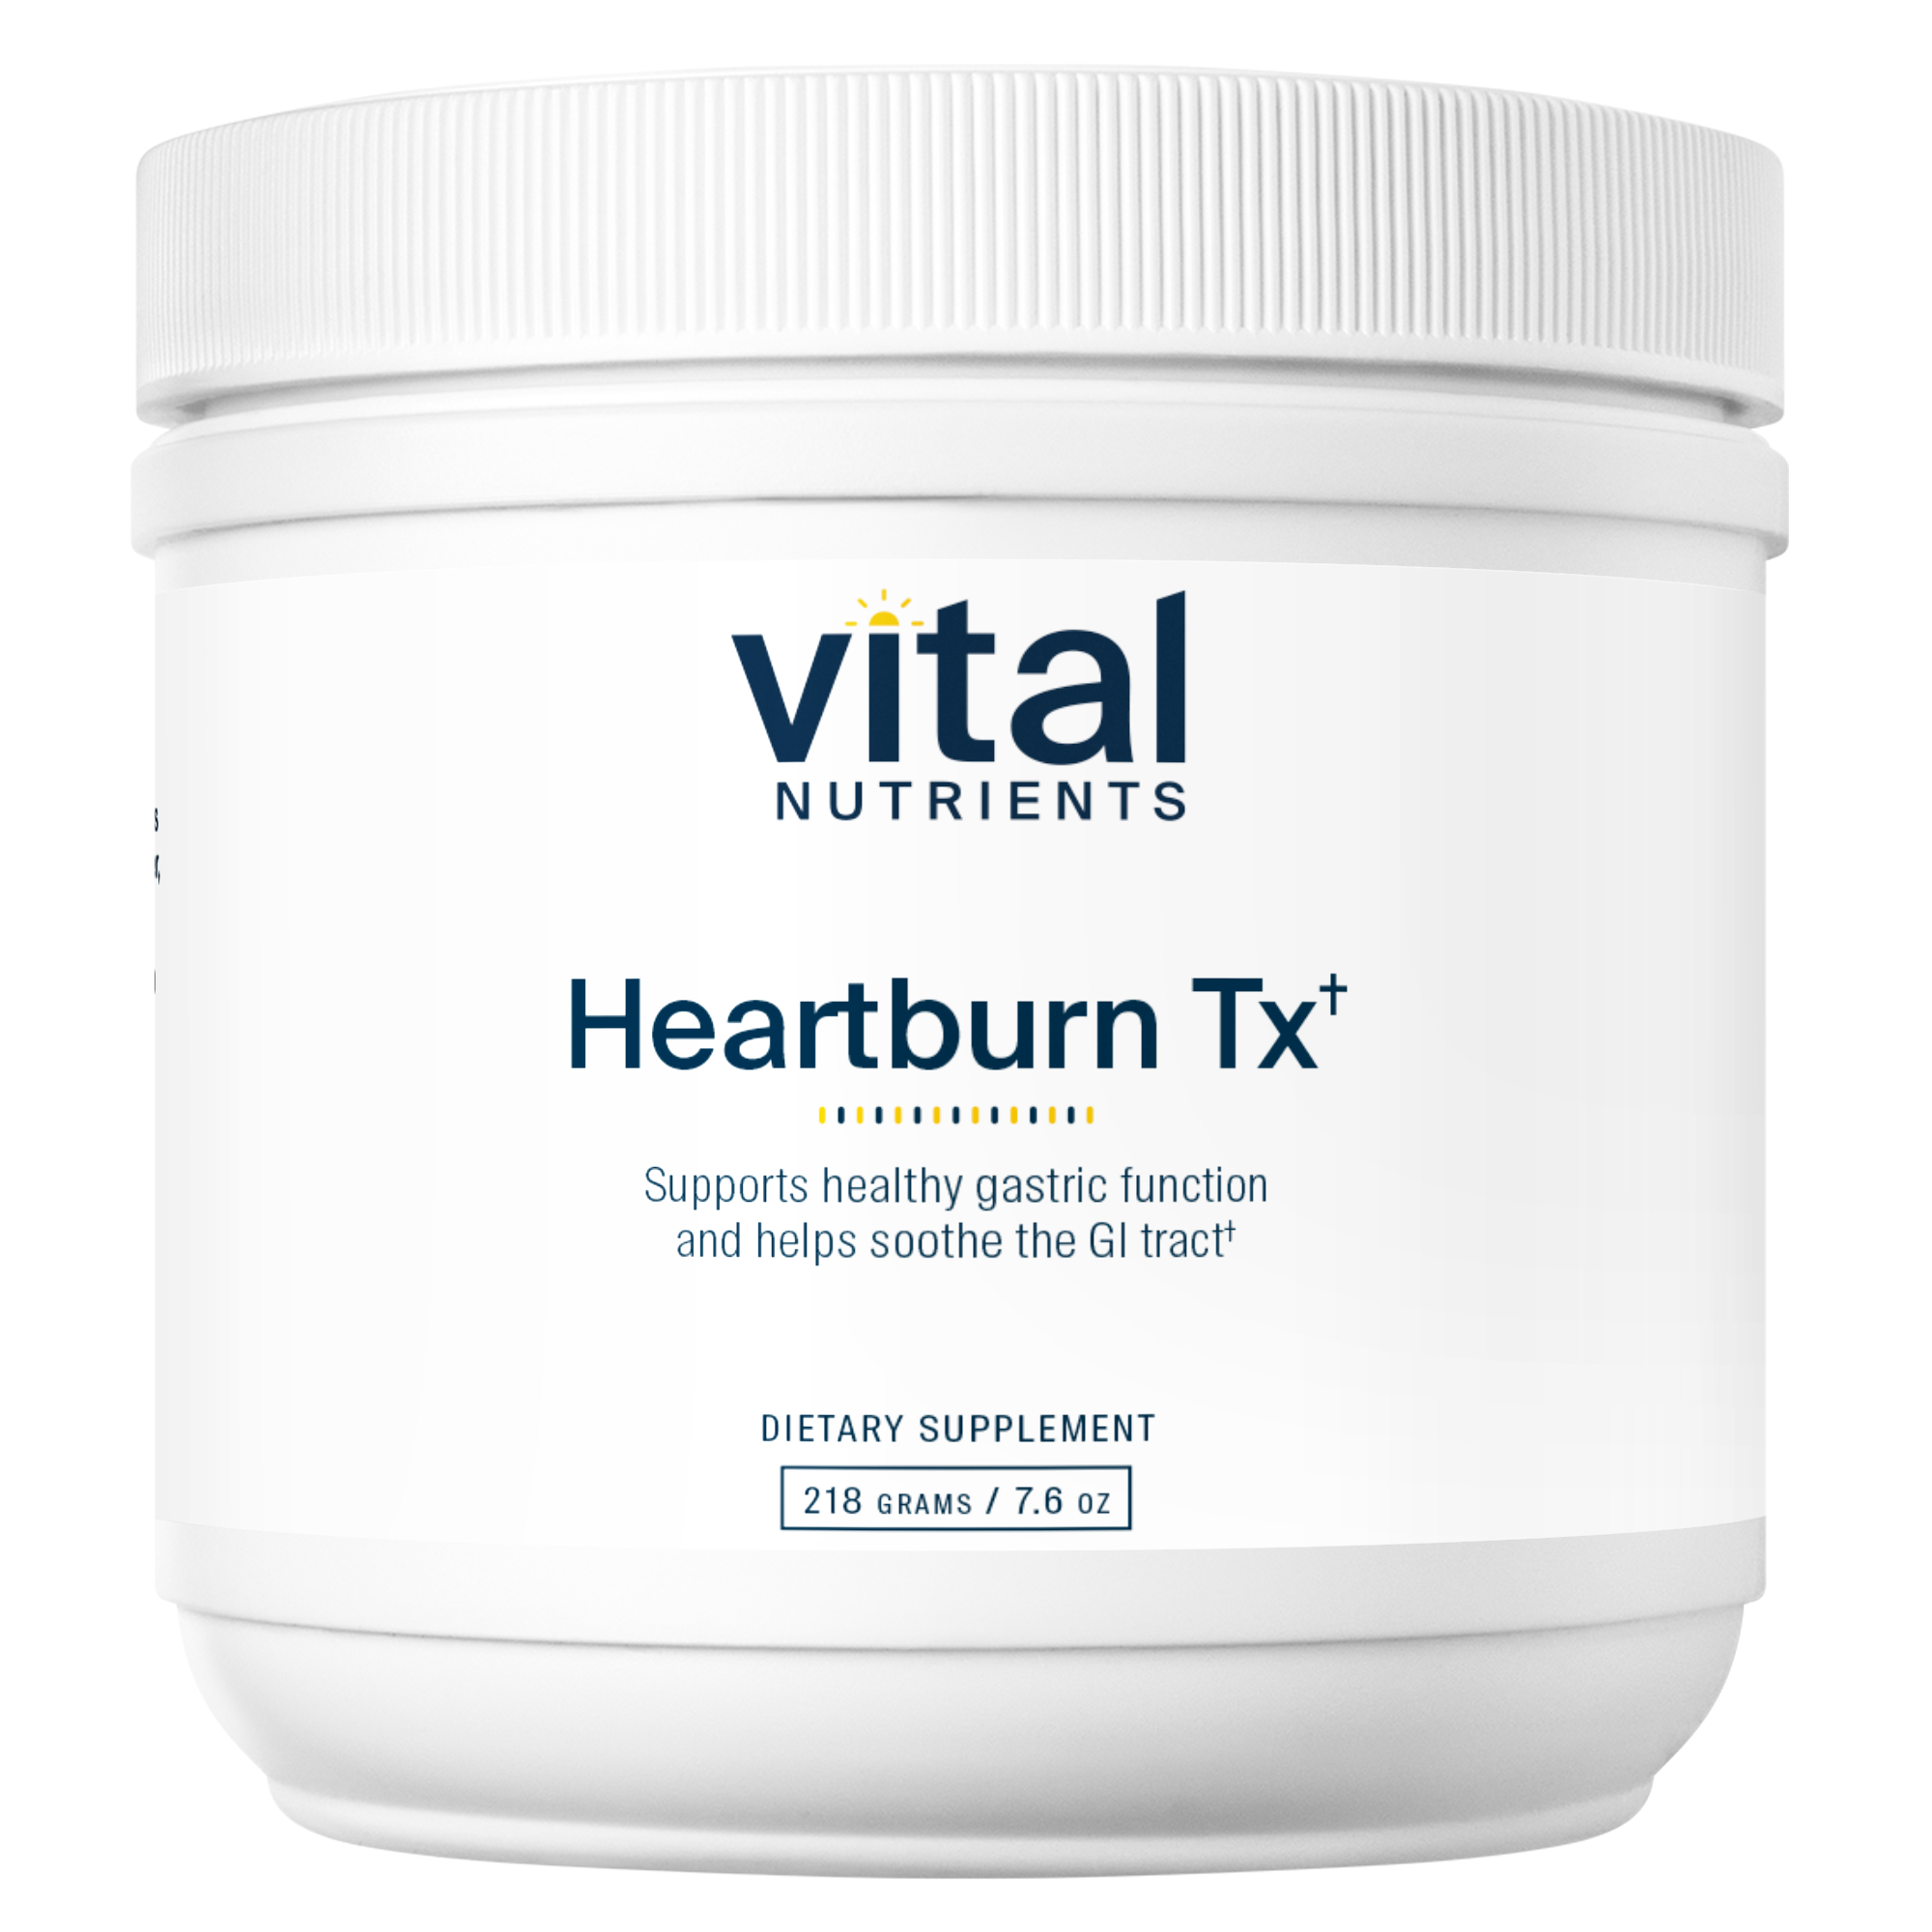 Heartburn Tx